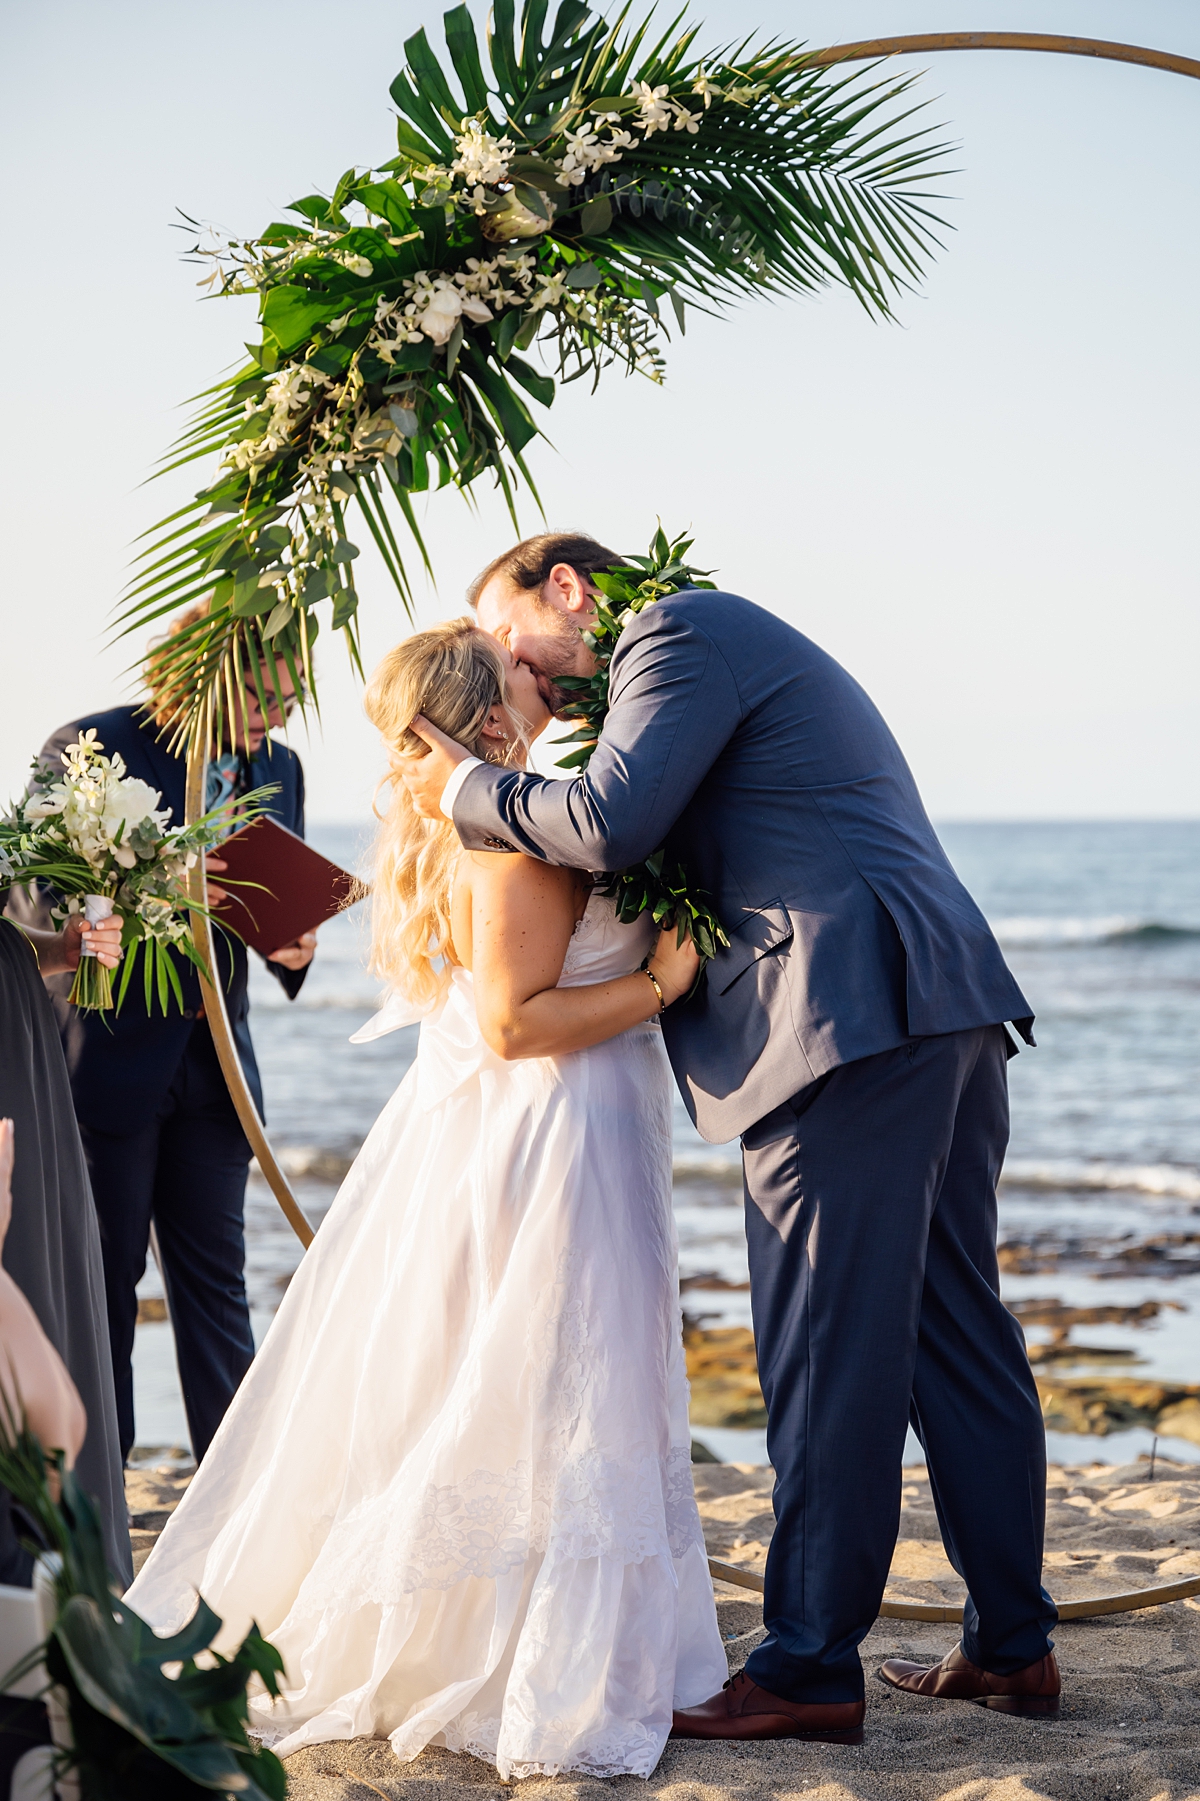 bride and groom kiss duringtheir Big Island wedding ceremony